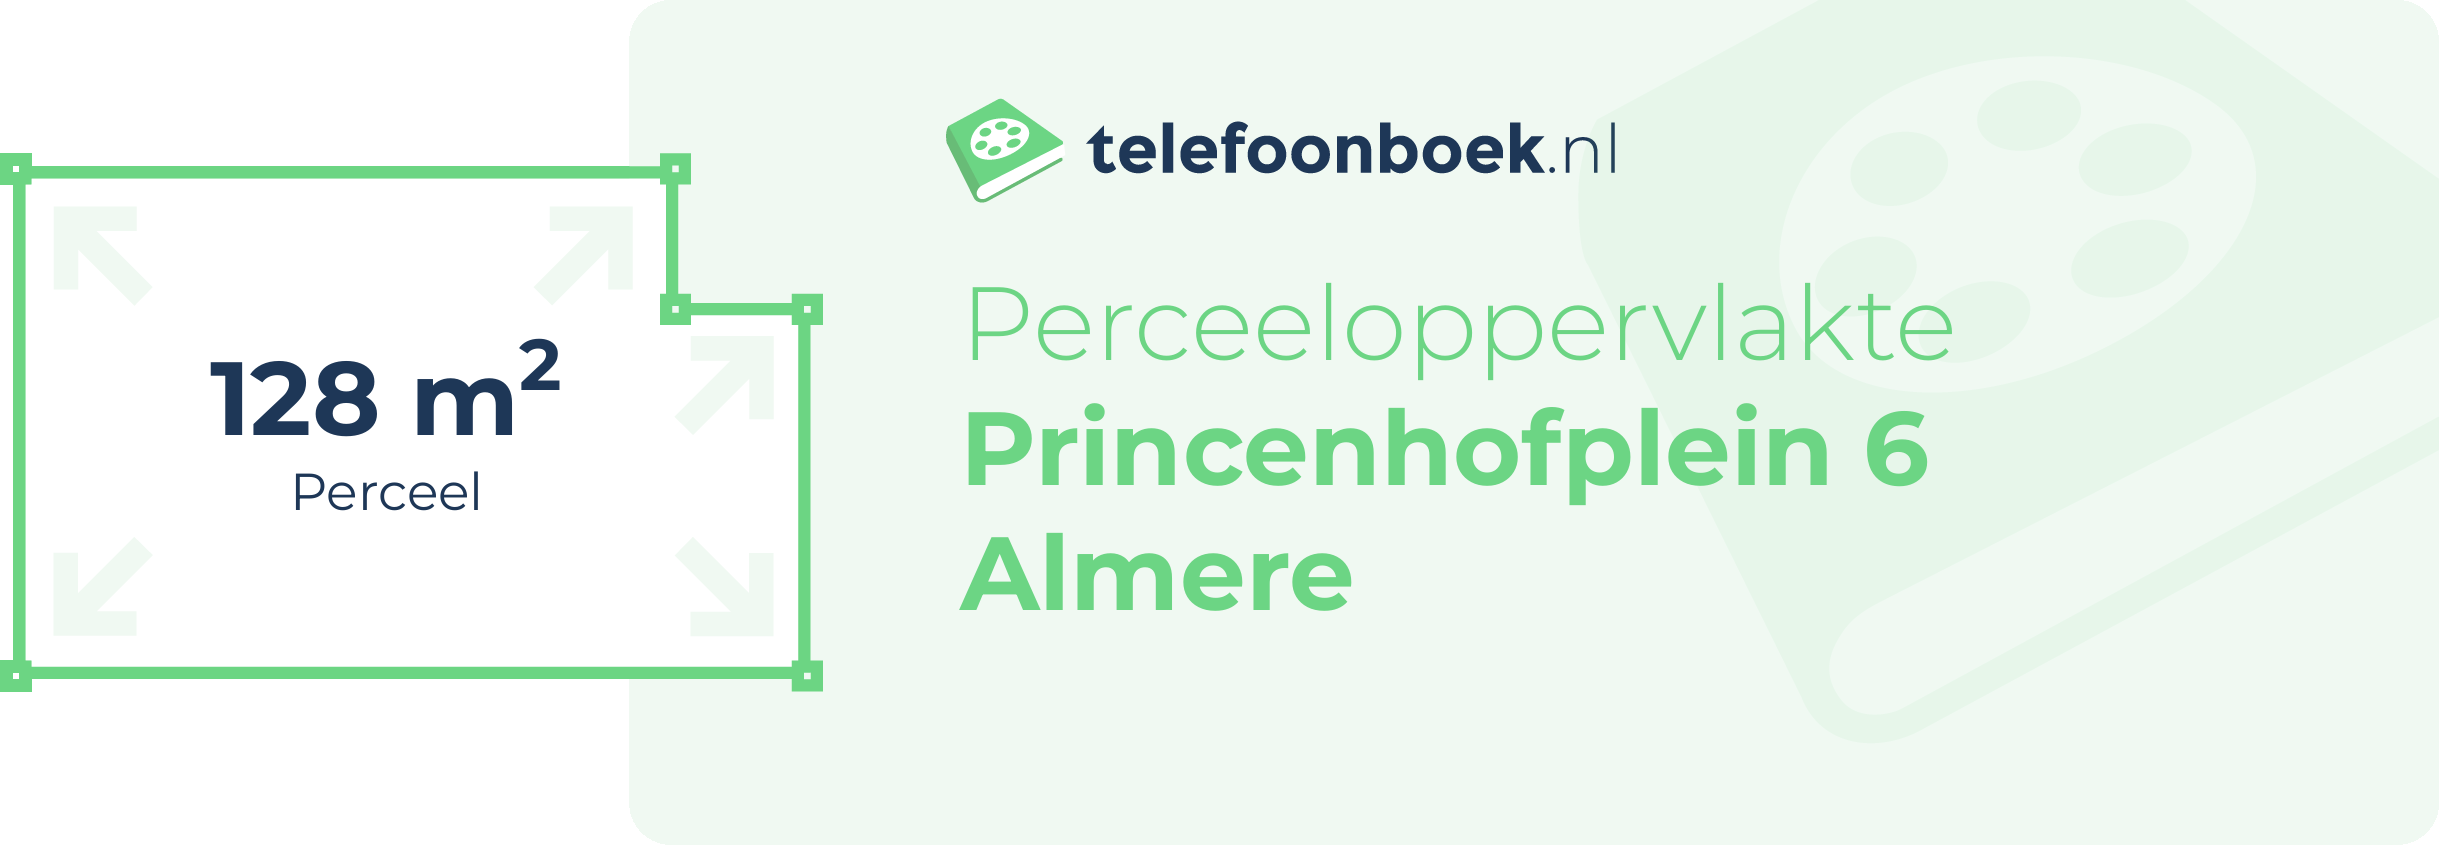 Perceeloppervlakte Princenhofplein 6 Almere